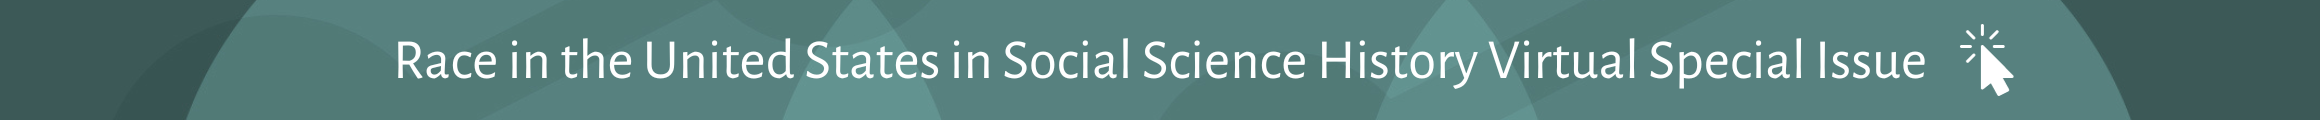 SSH Virtual Issue Banner